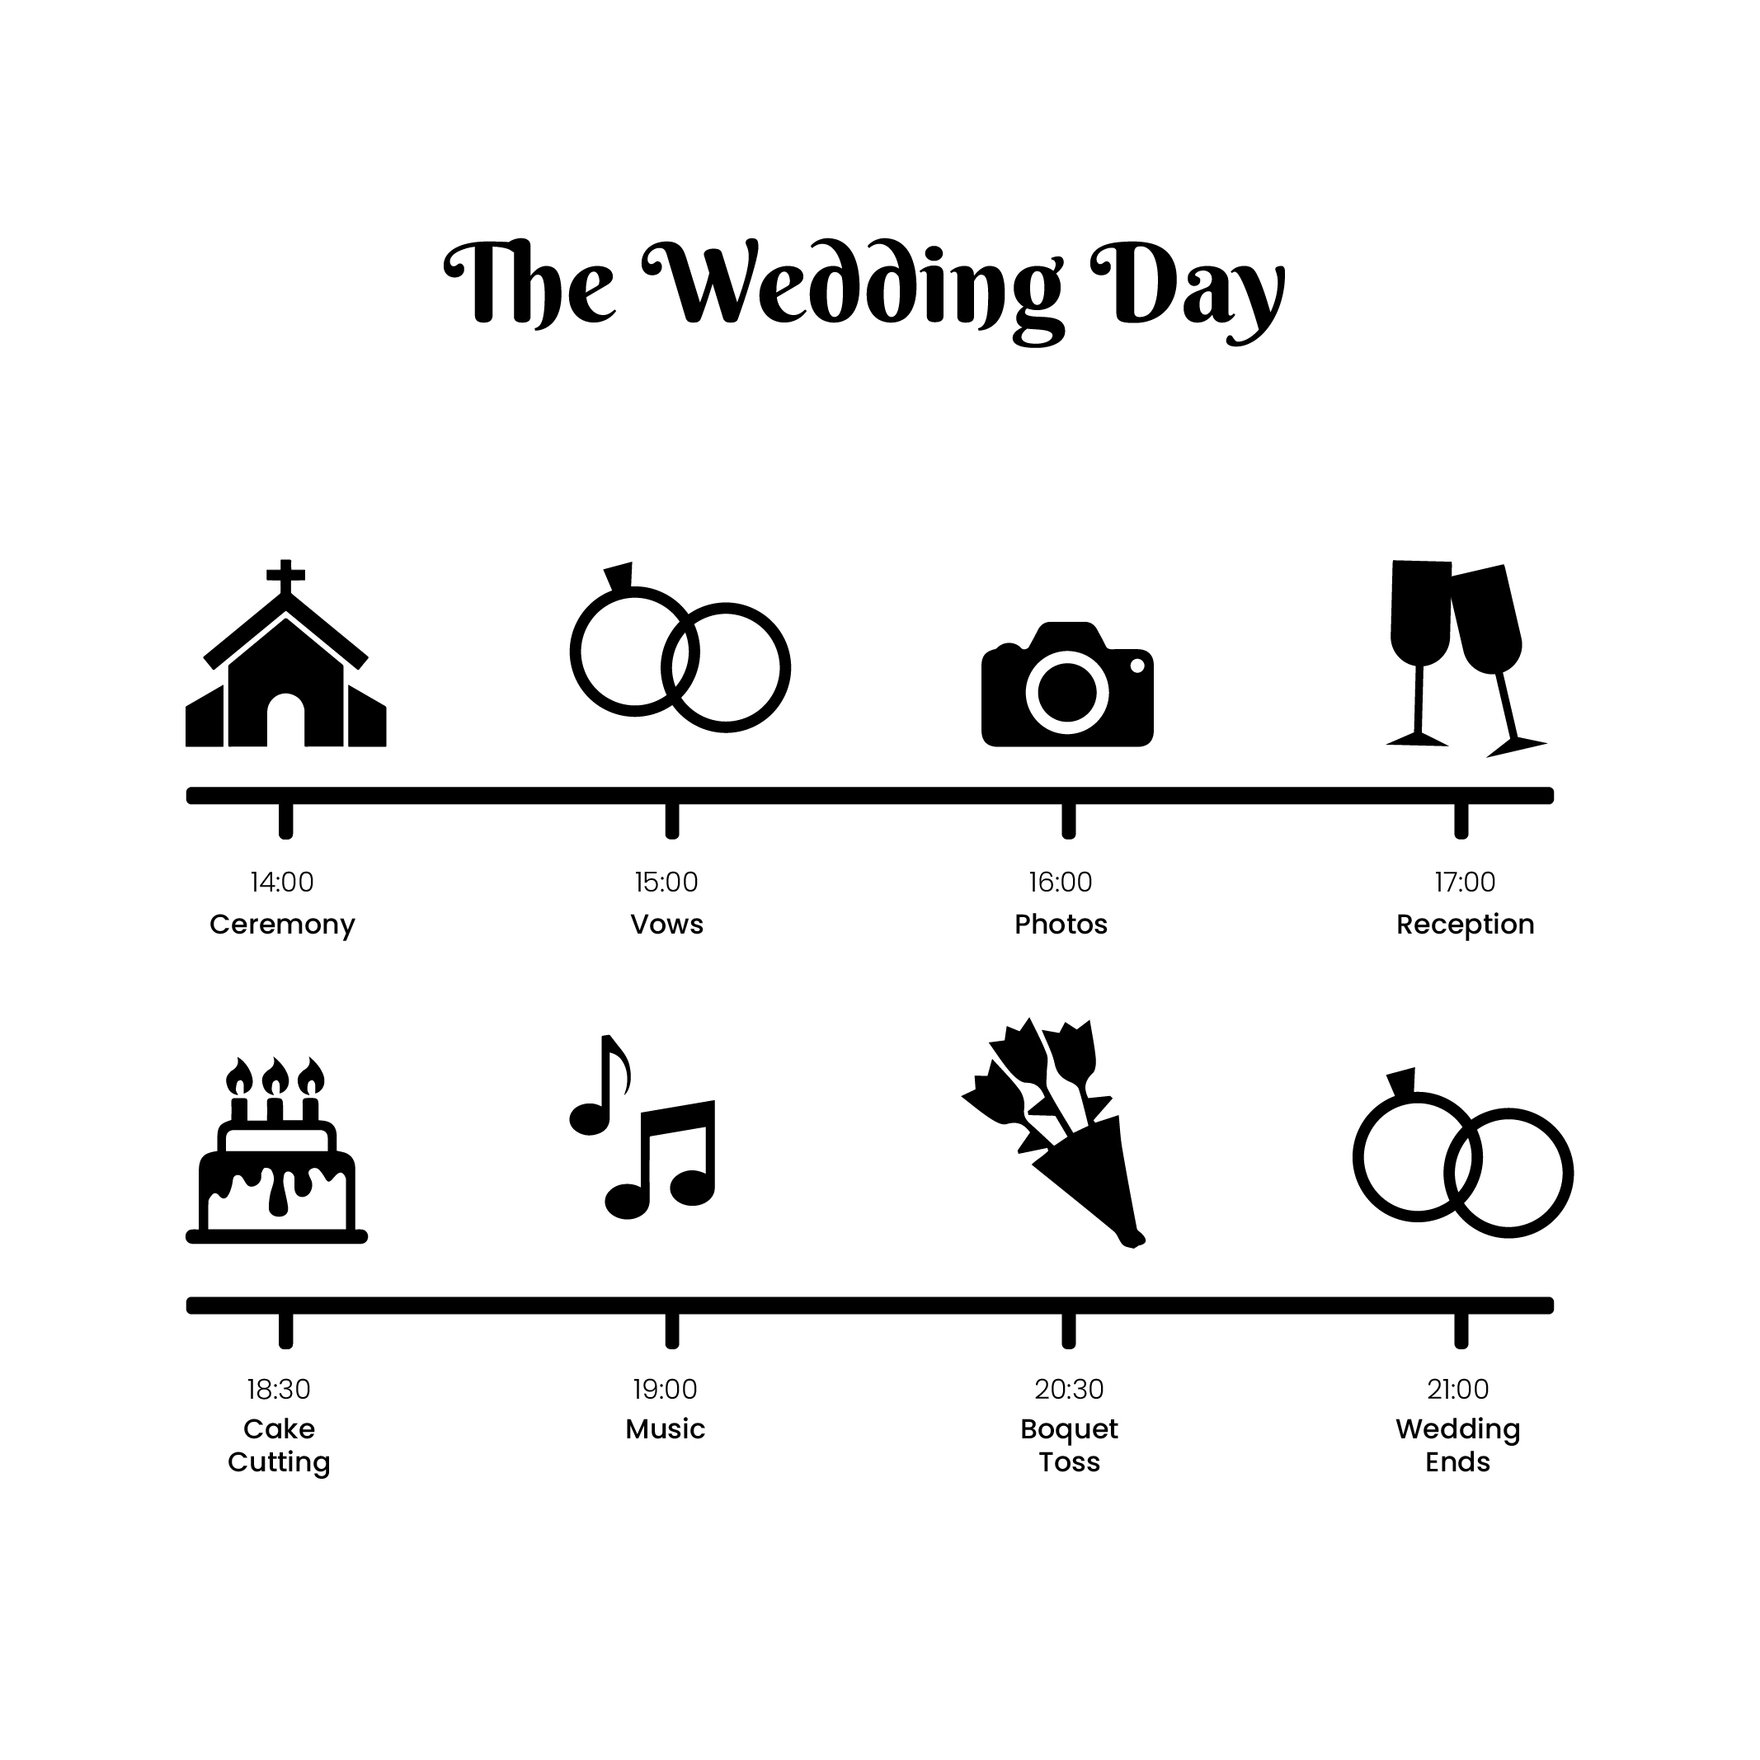 Free Wedding Timeline Silhouette in Illustrator, EPS, SVG, JPG, PNG